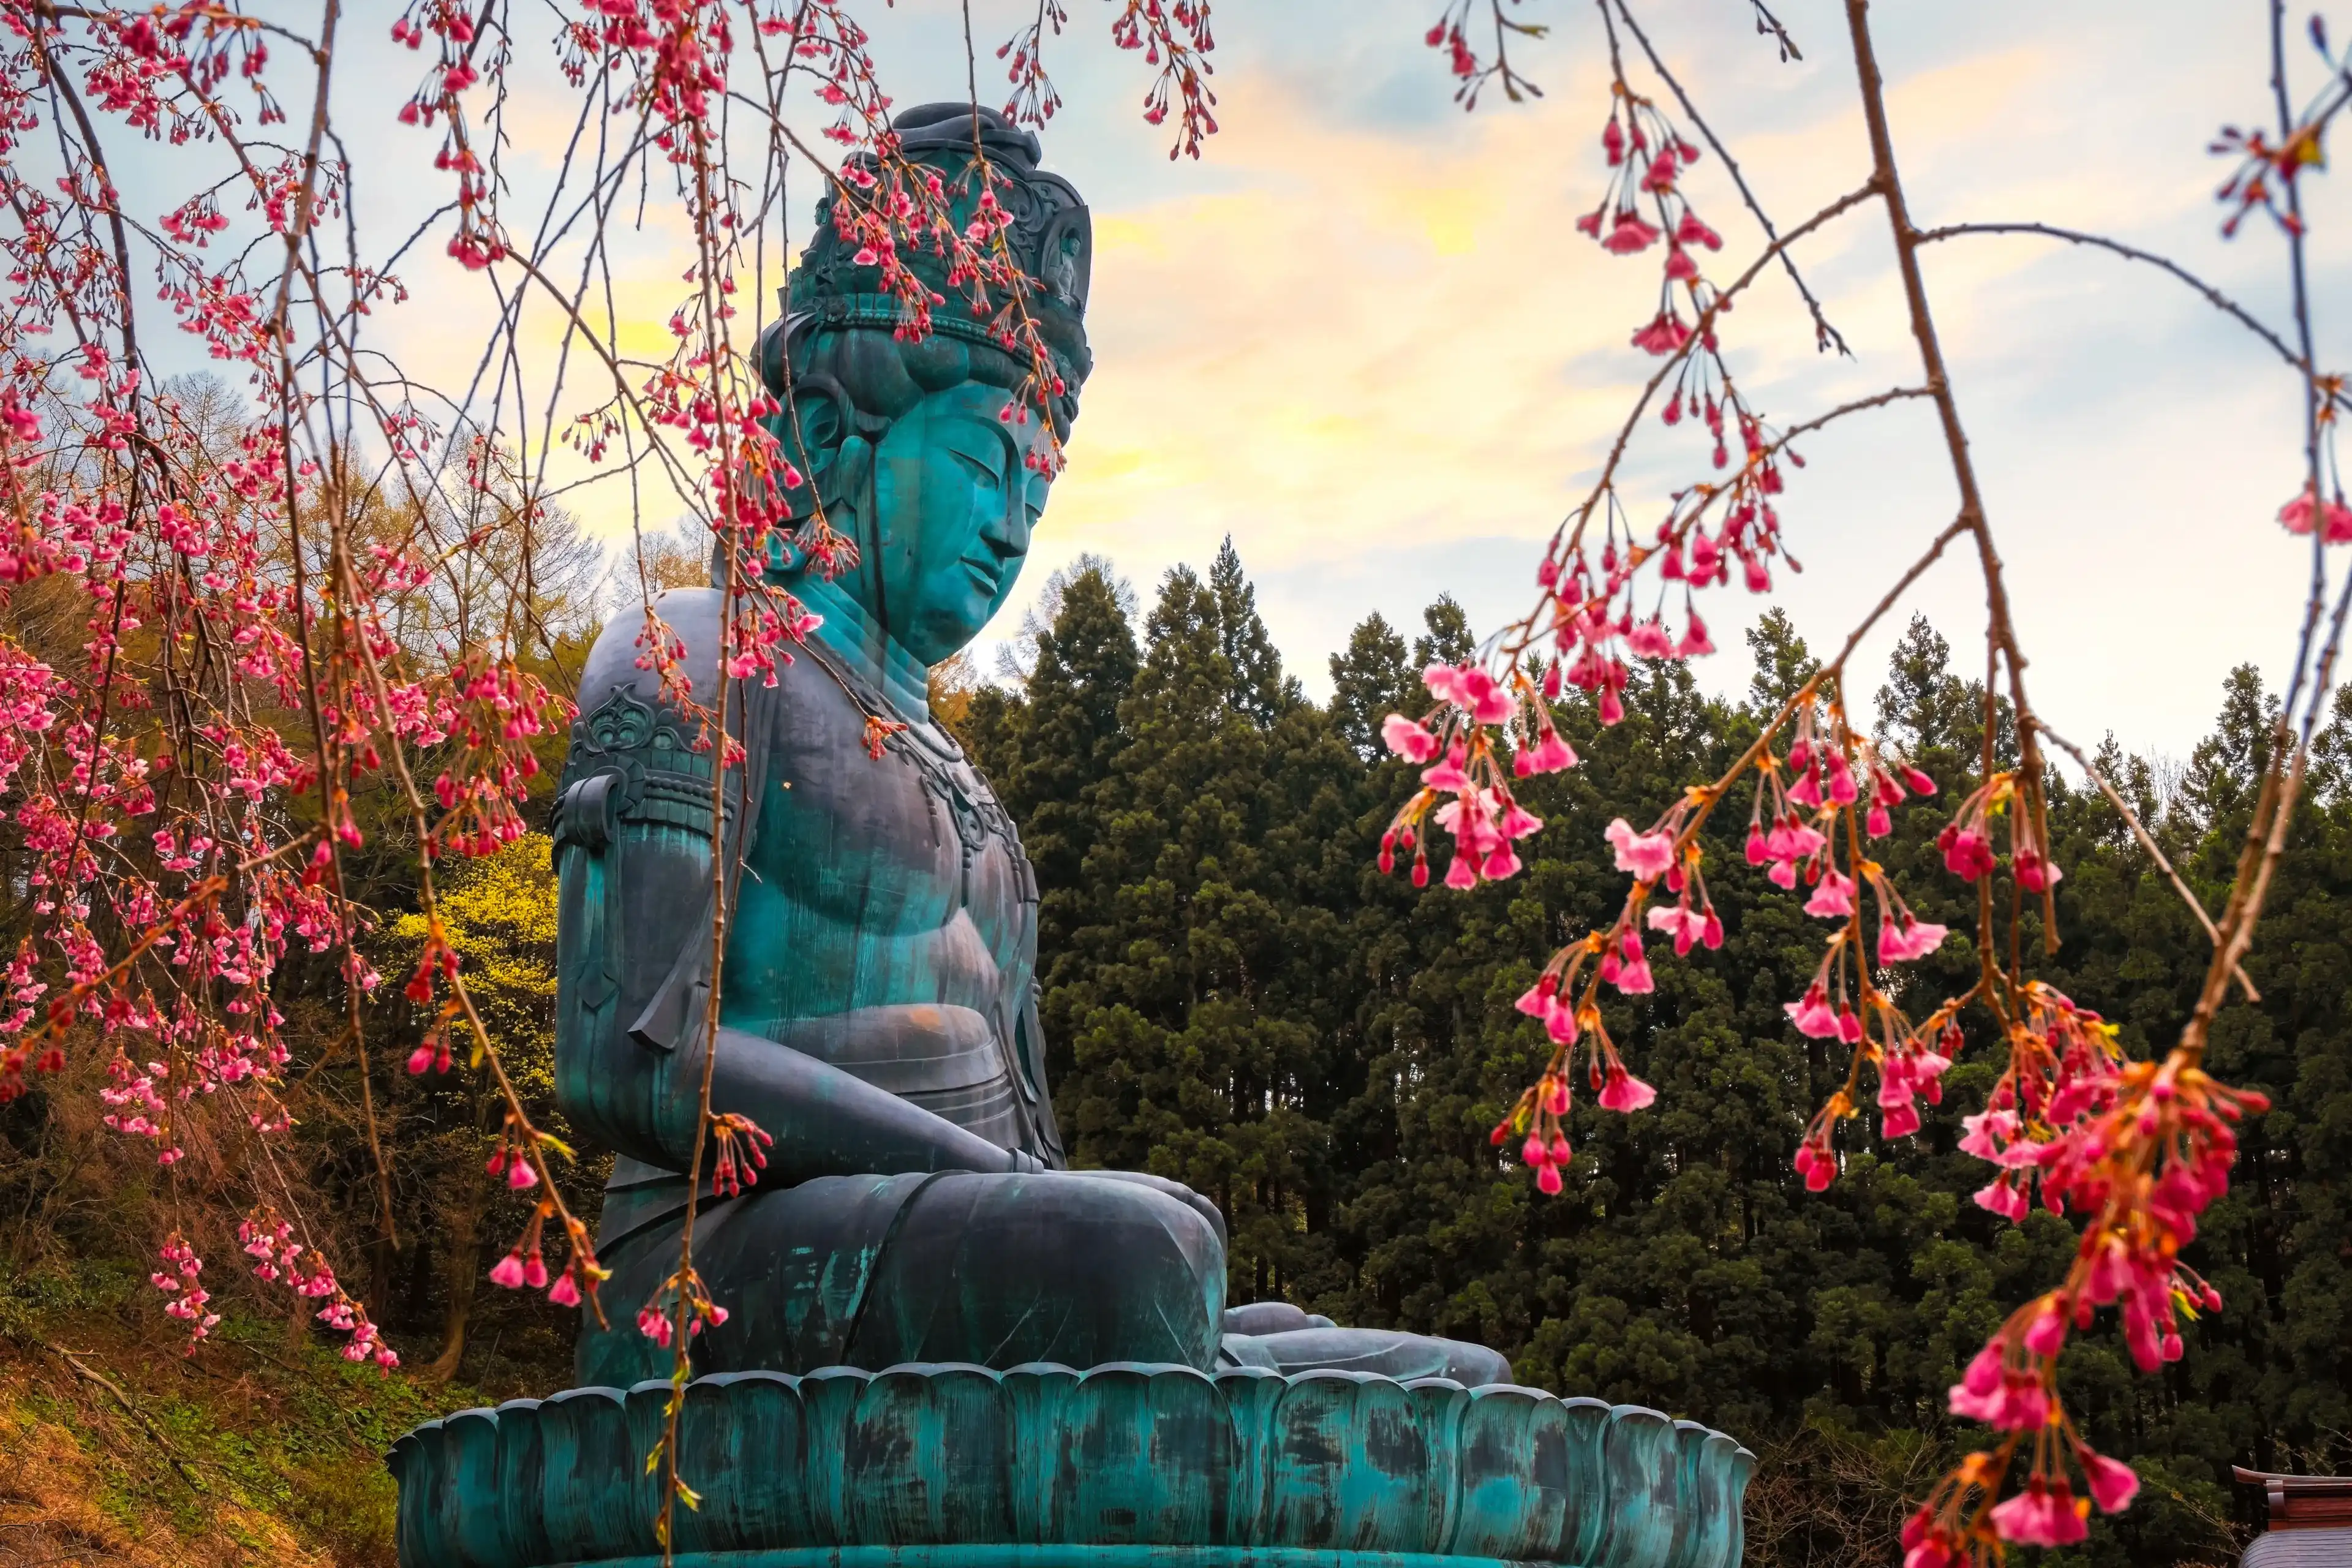 The Big Buddha - Showa Daibutsu at Seiryuji Temple in Aomori, Japan